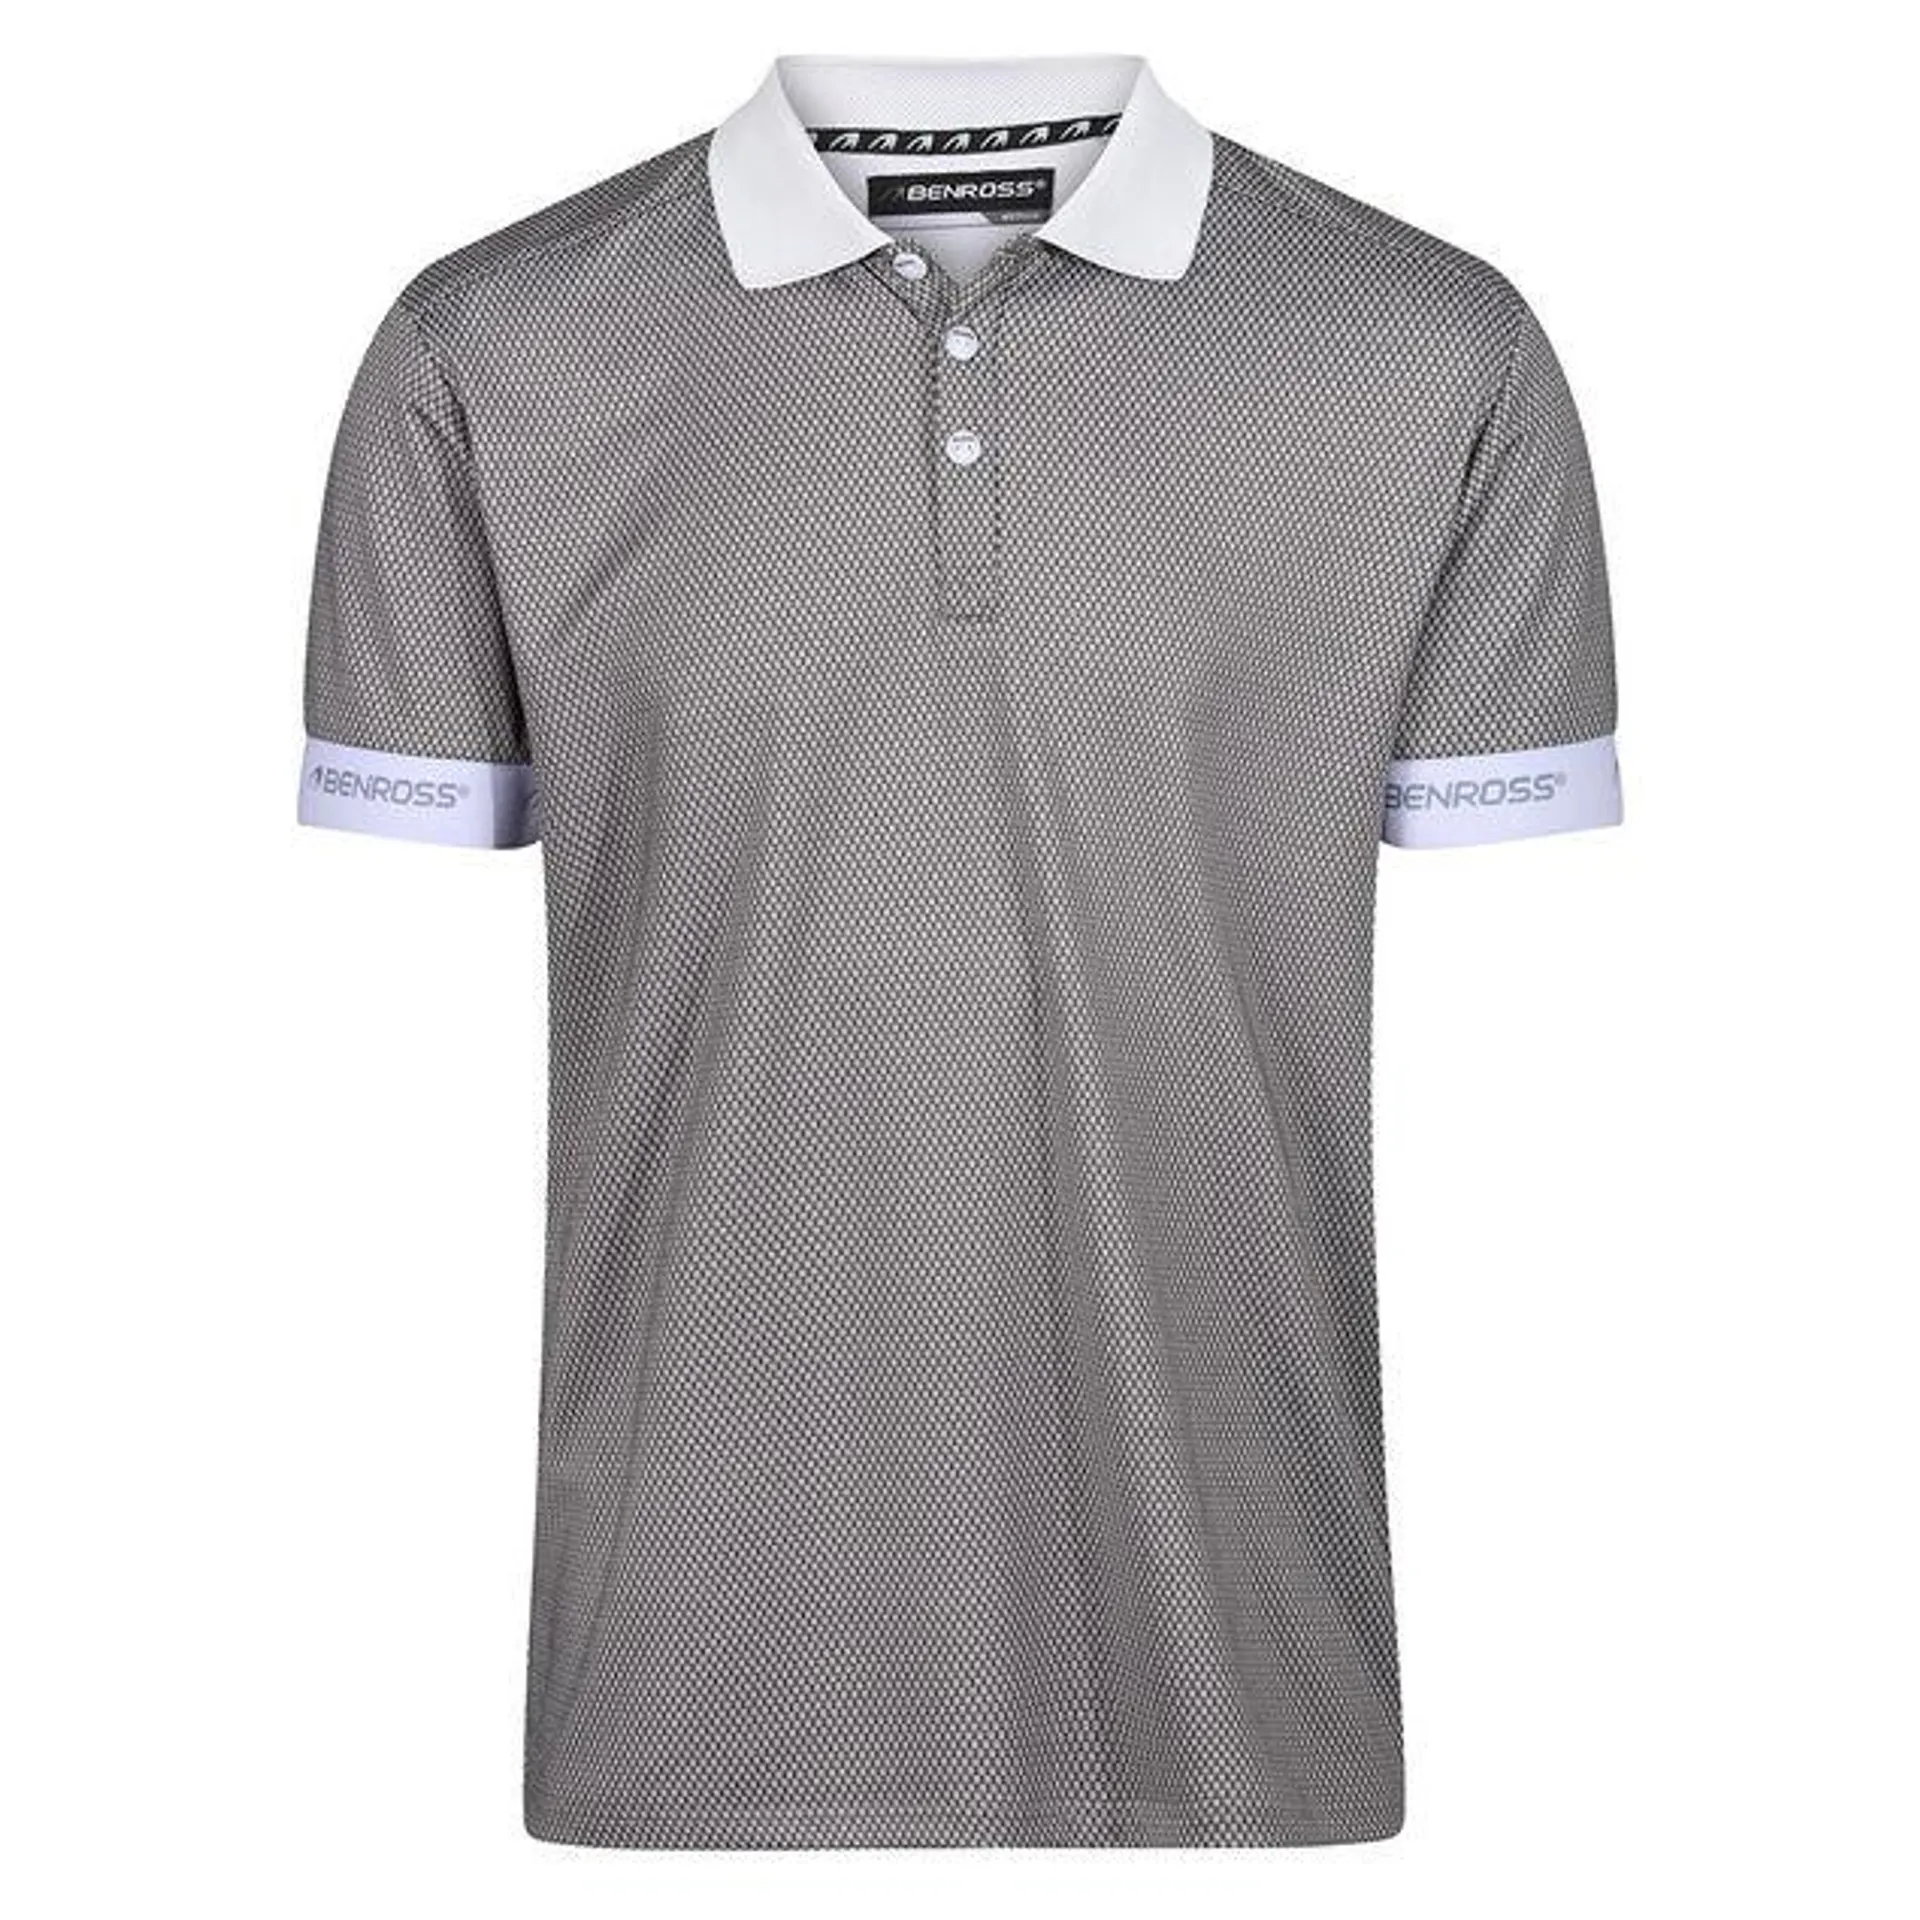 Benross Men's Honeycomb Jacquard Golf Polo Shirt